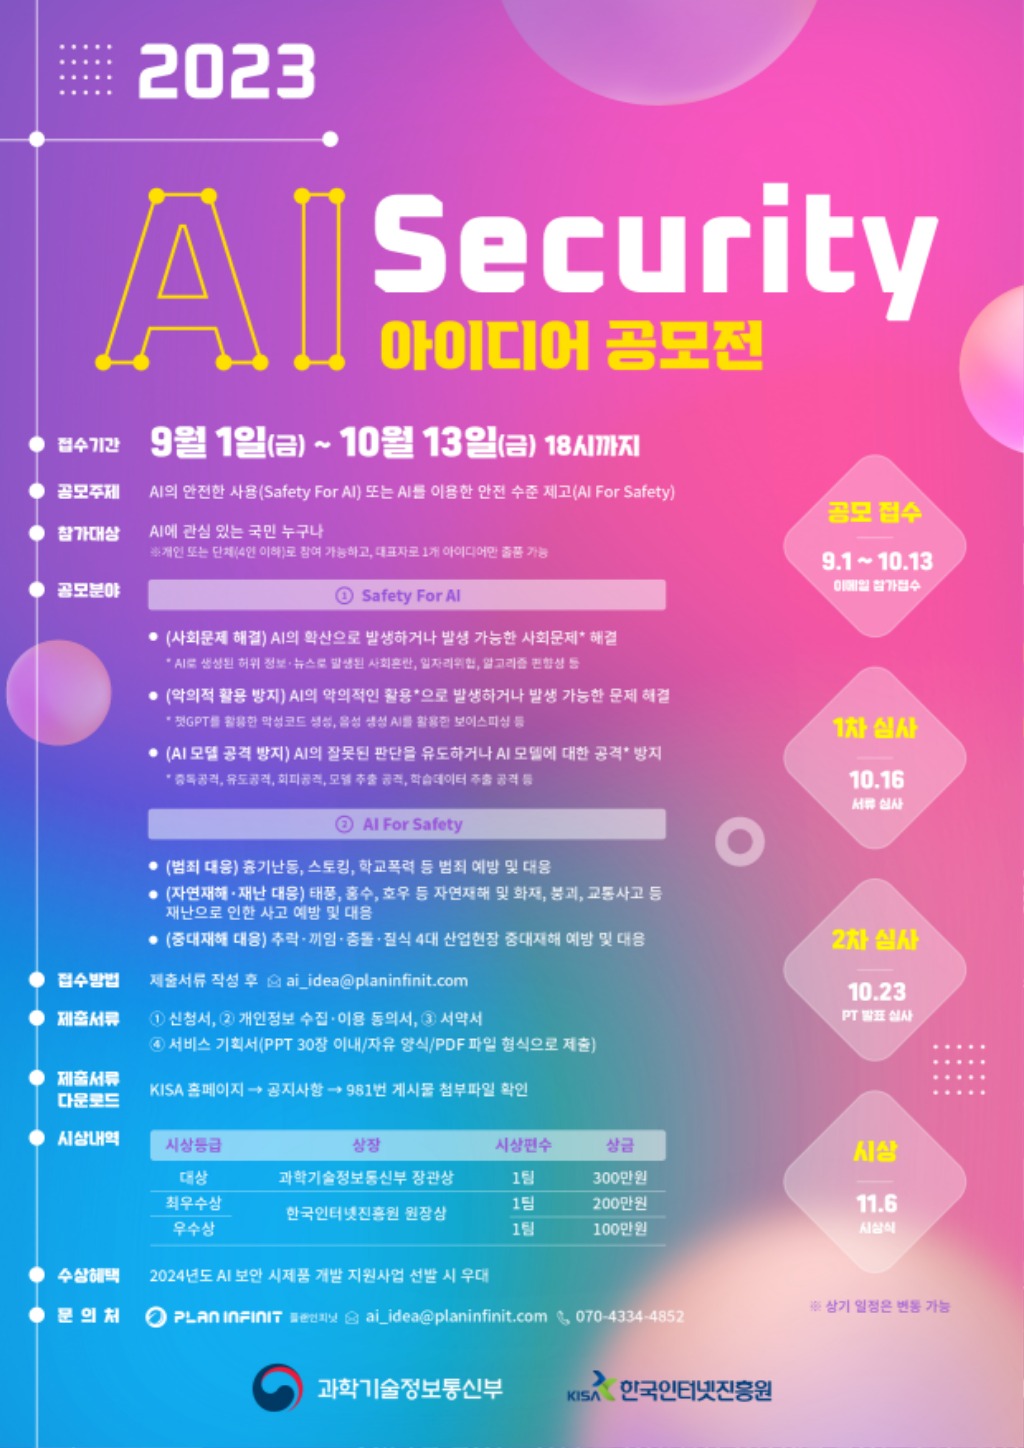 230911-KISA-참고이미지(2023년 AI SECURITY 아이디어 공모전 포스터).jpg